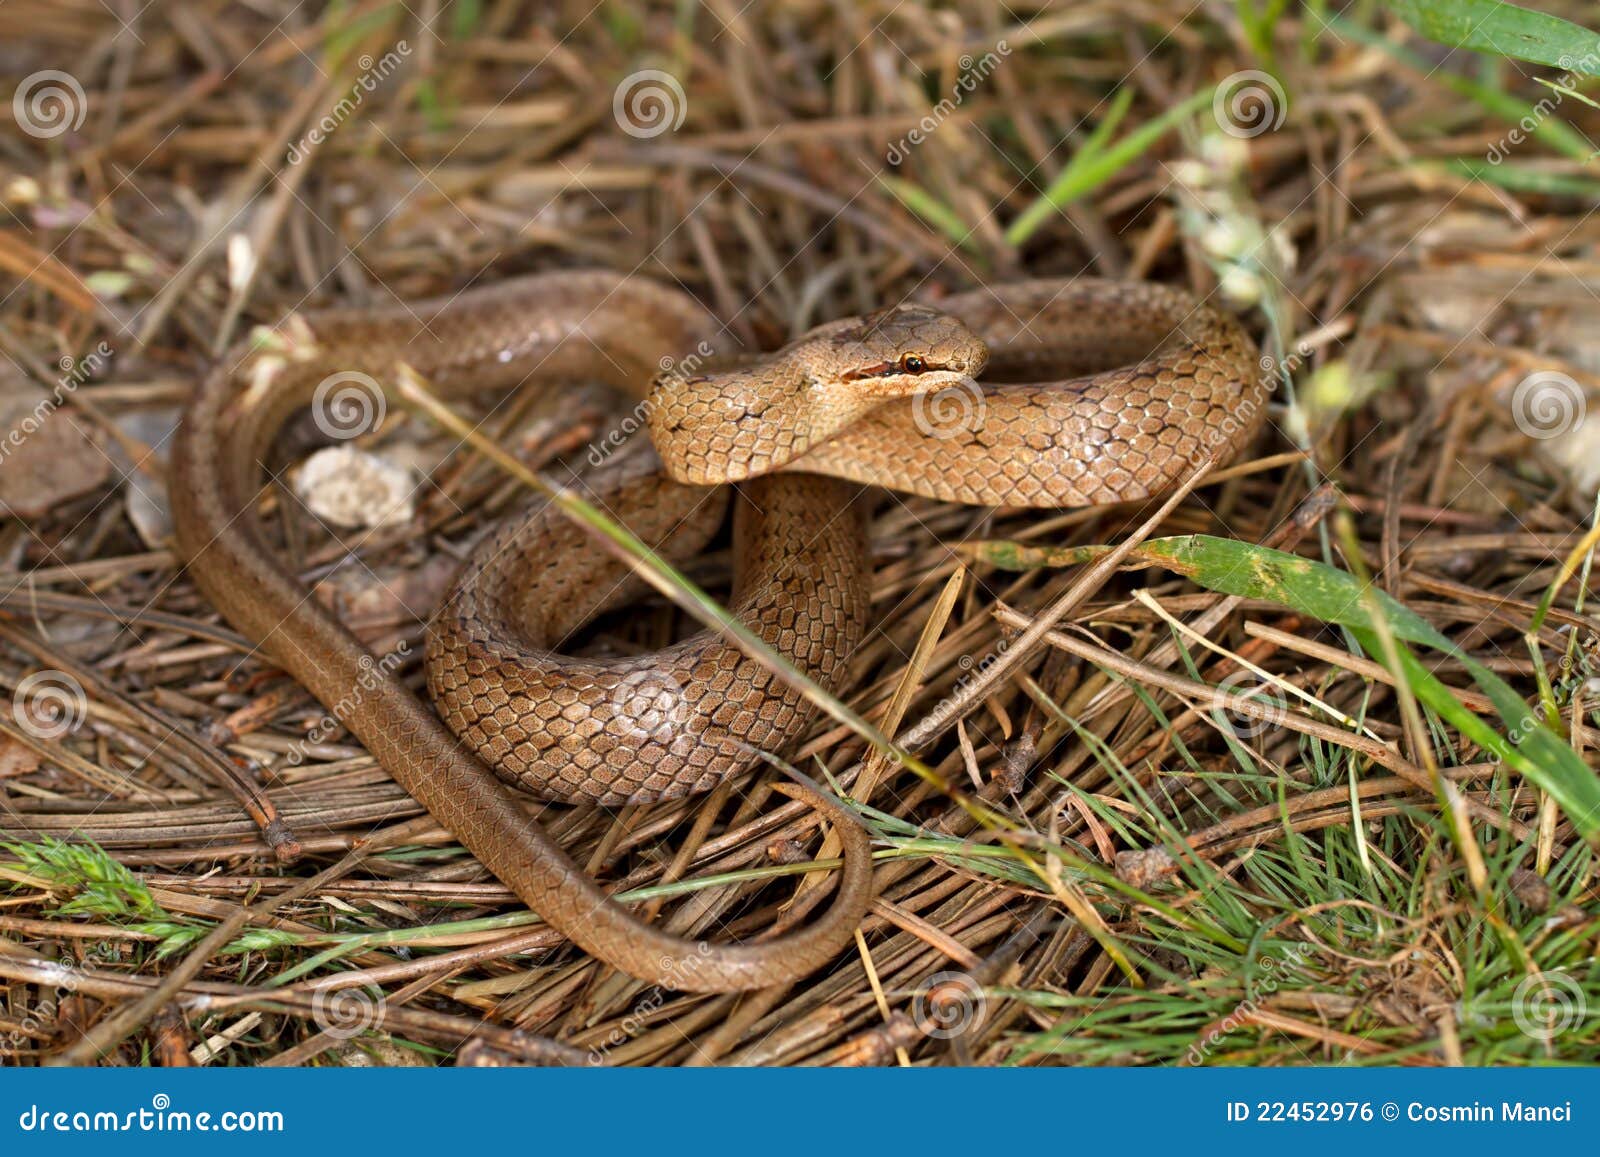 Медянка змея в беларуси ядовитая или нет фото